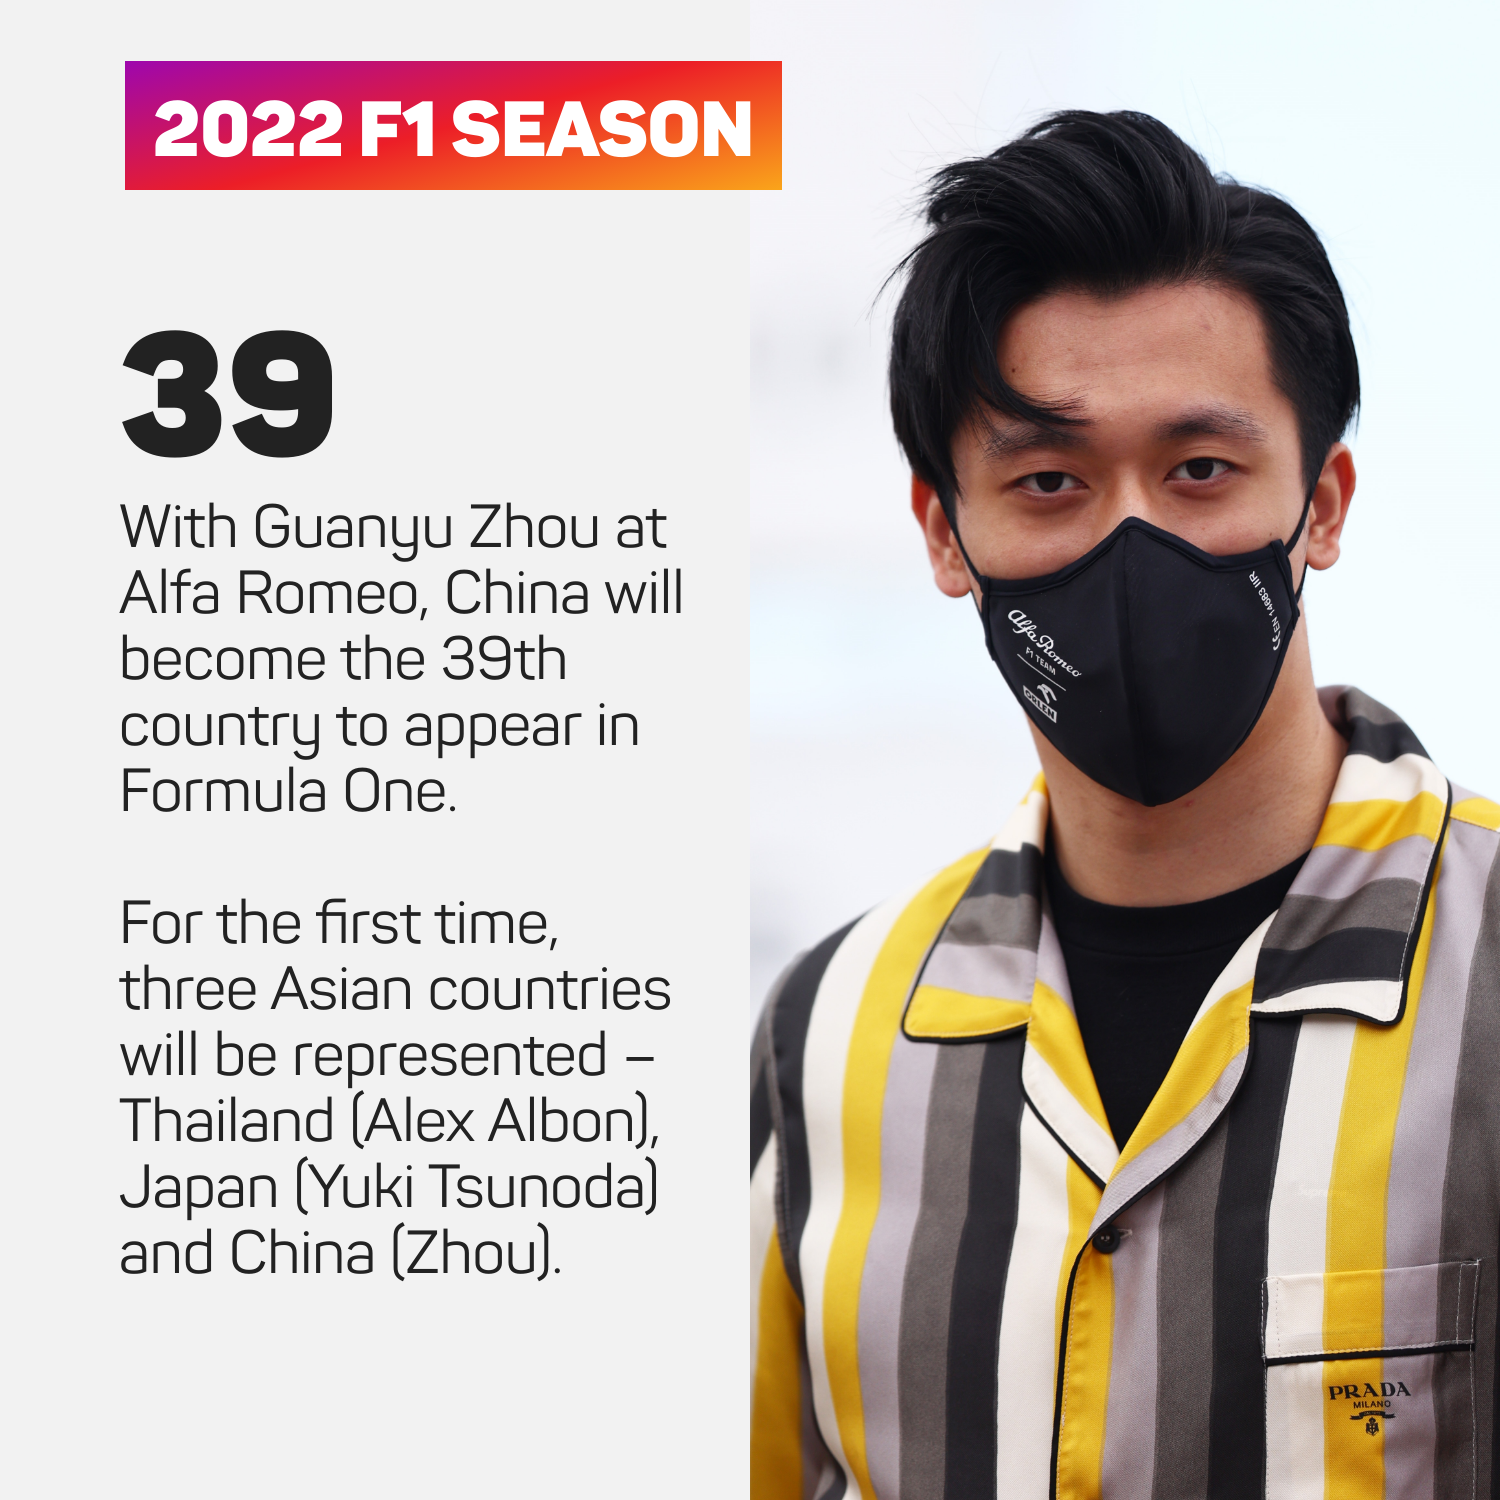 Guanyu Zhou will represent China this season